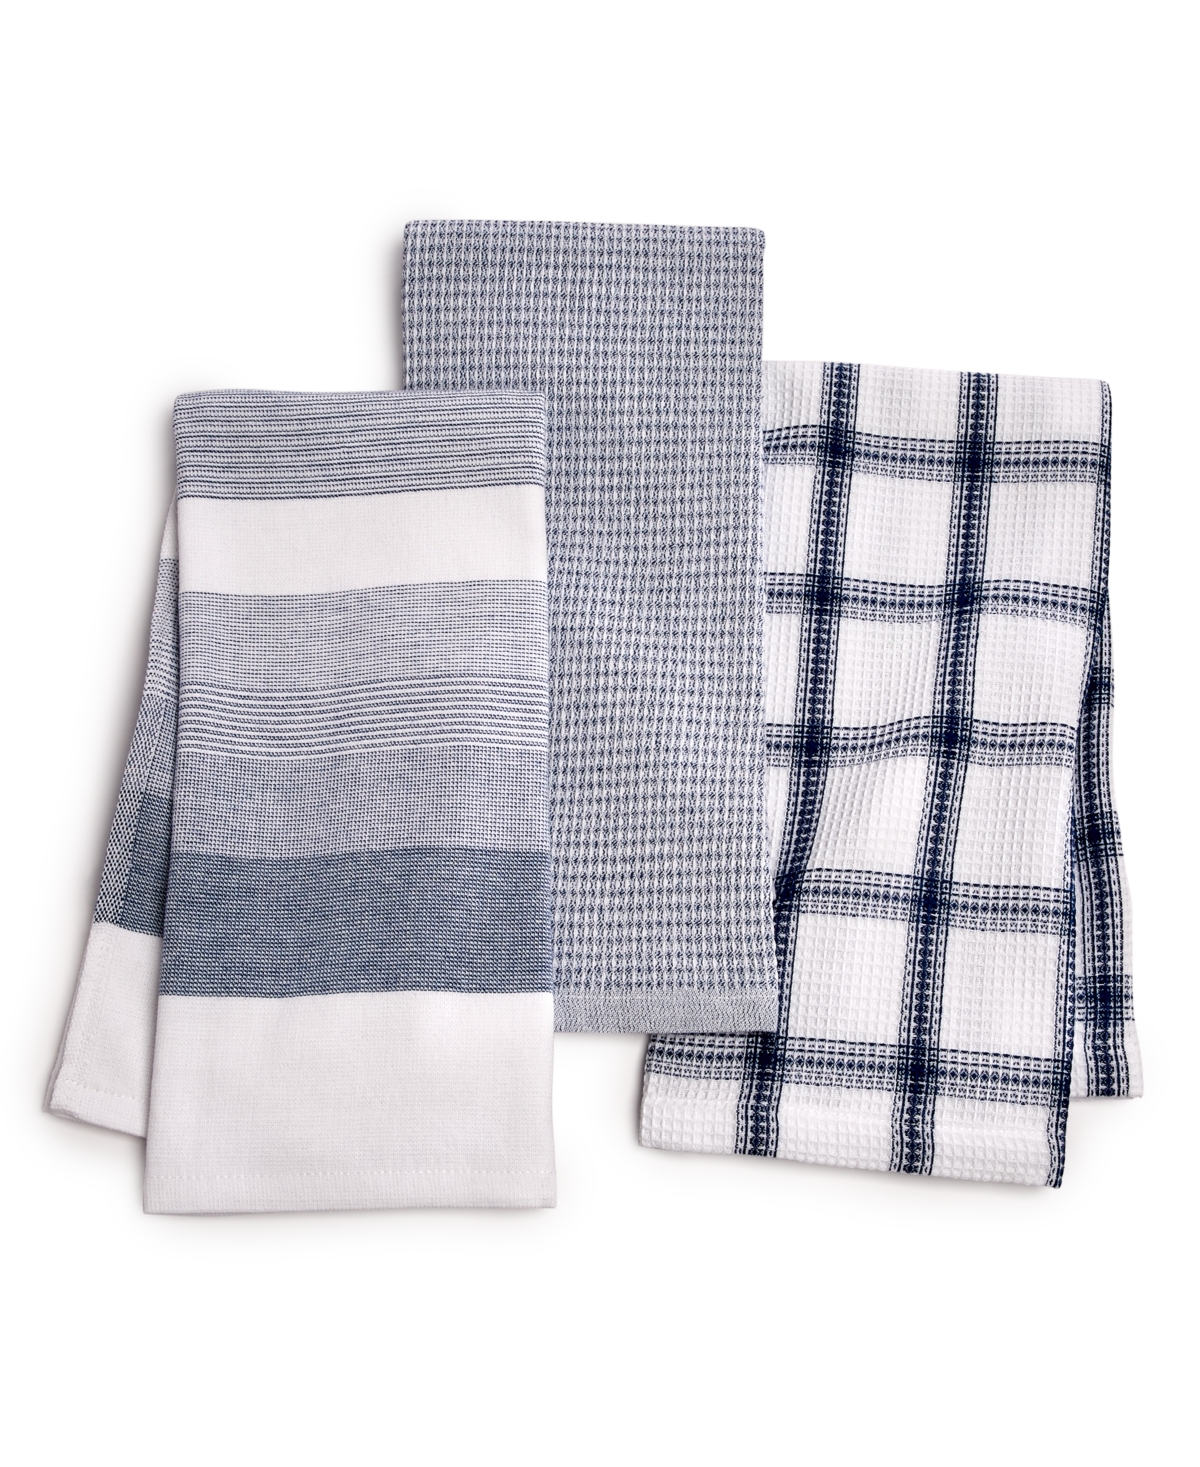 Core 3-Pc. Cotton Blue Towel Set, Created for Macy's